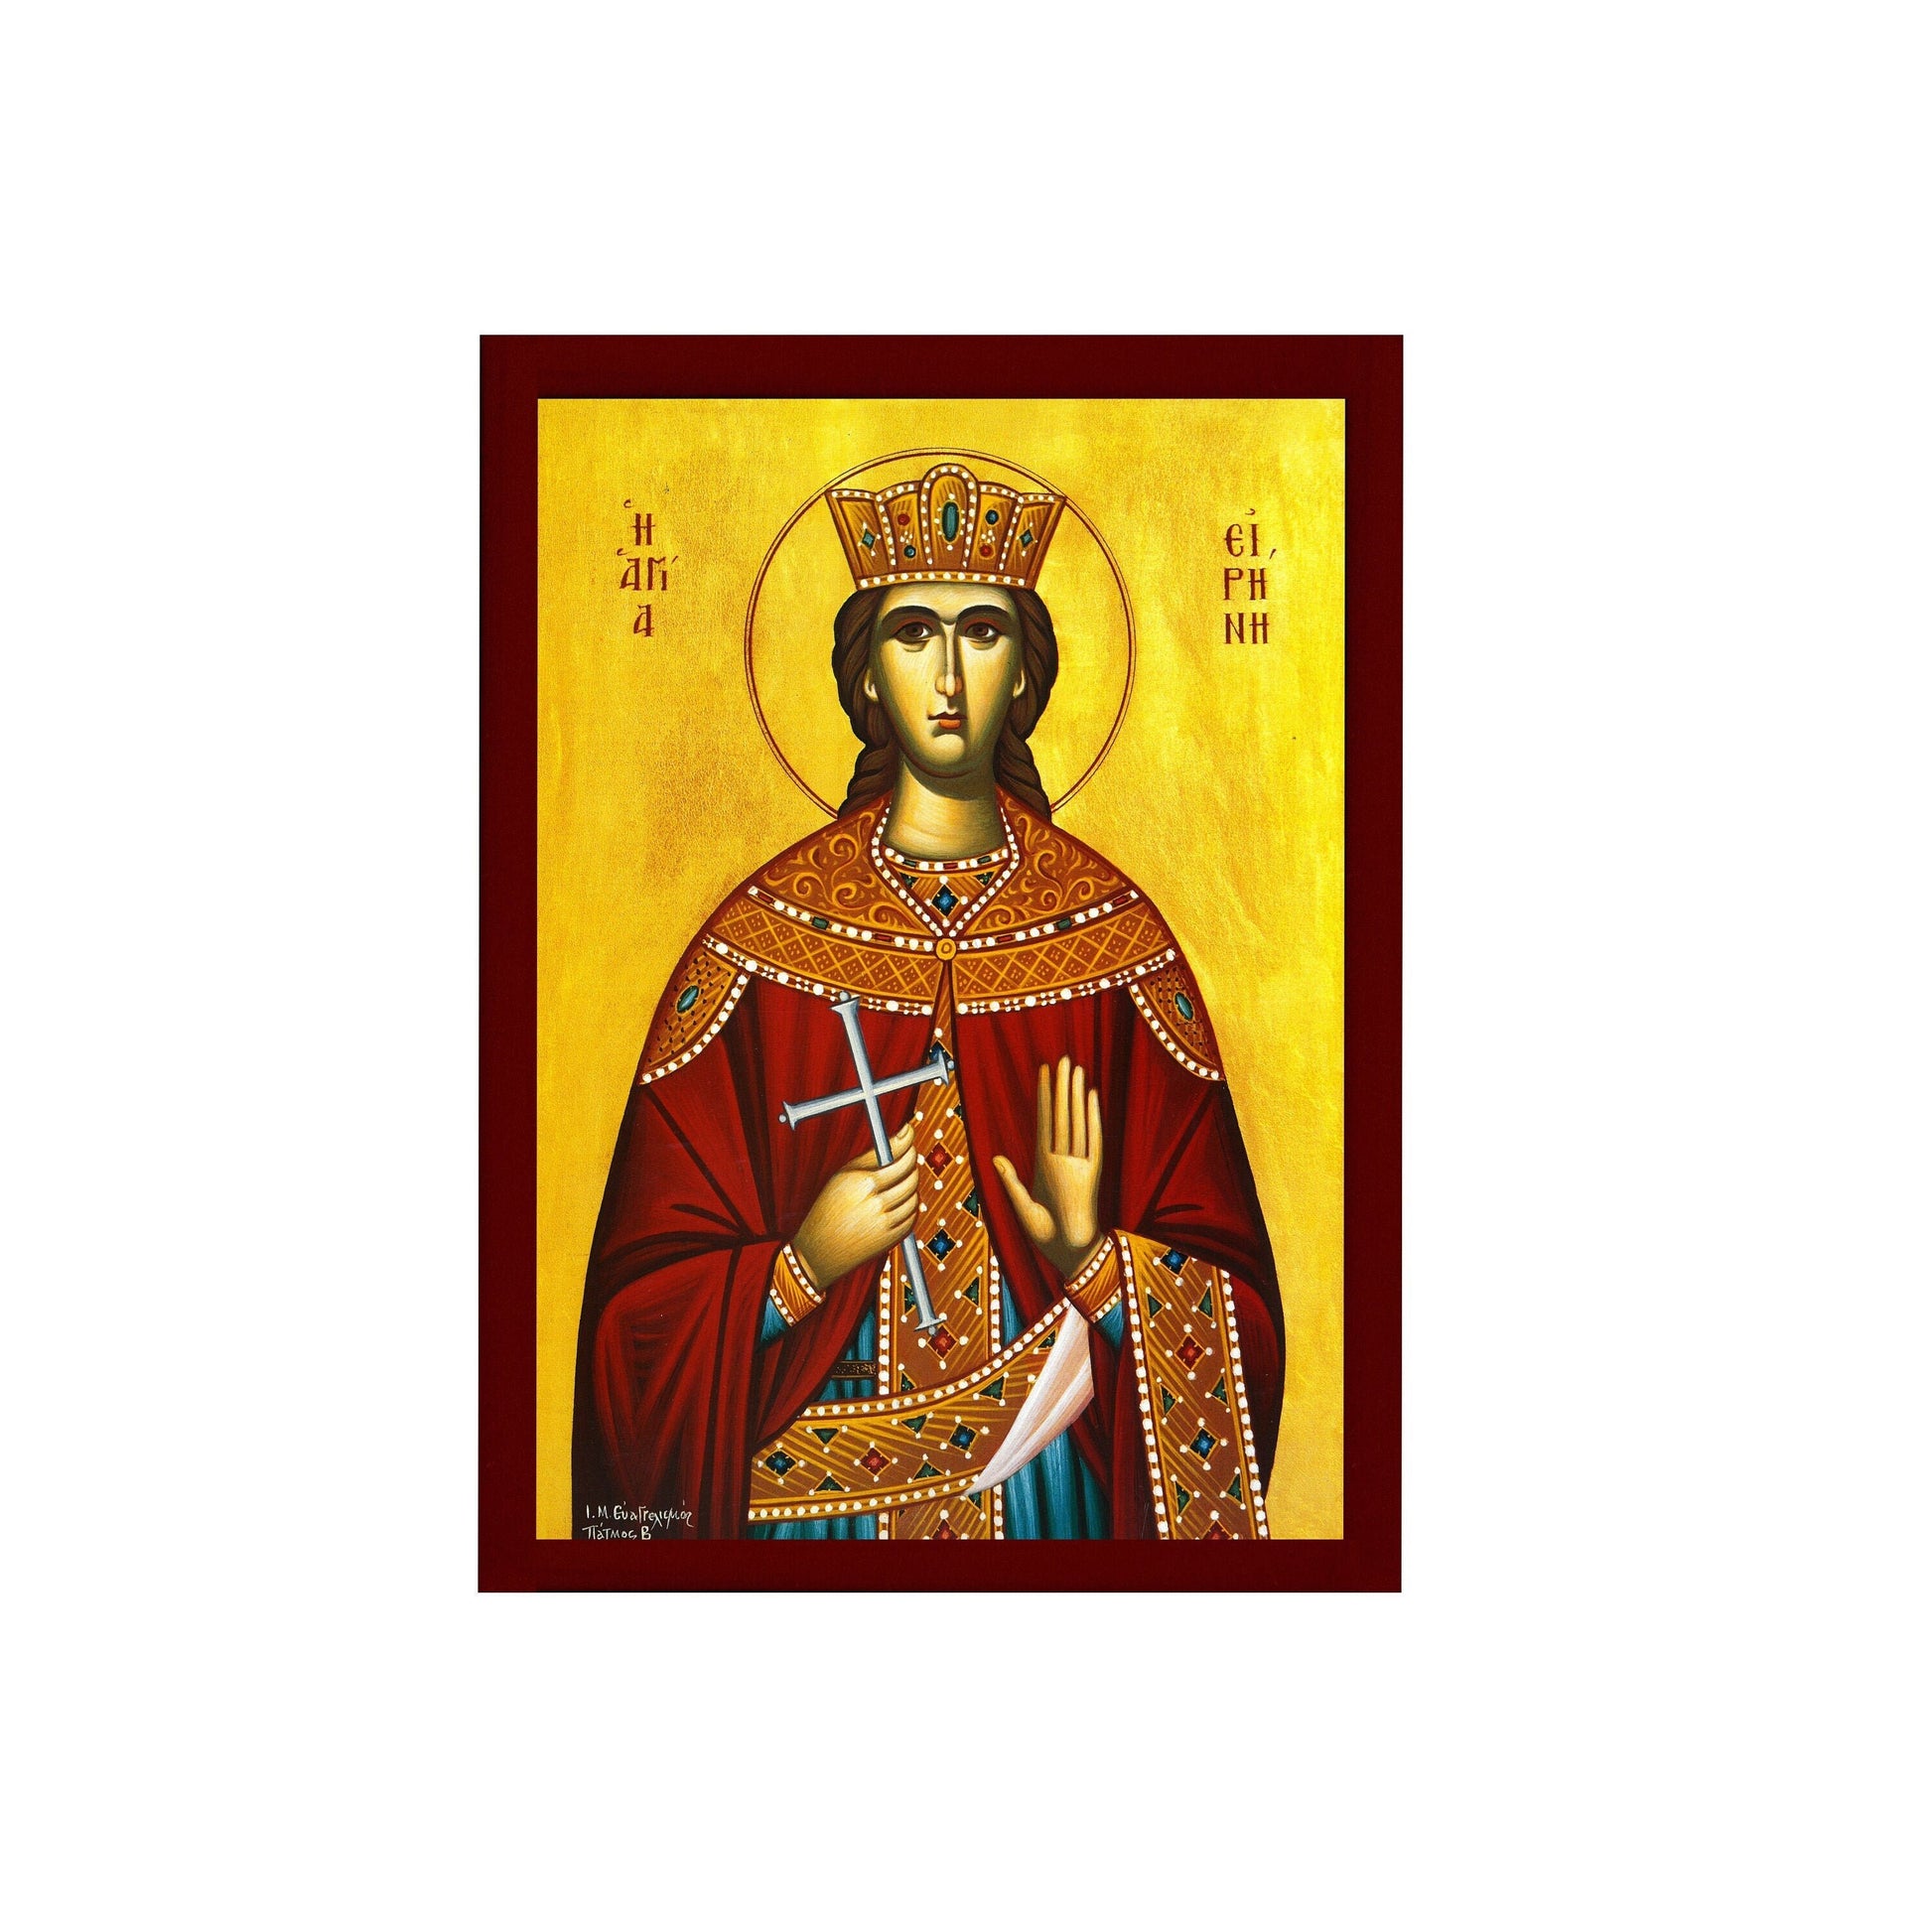 Saint Irene icon, Handmade Greek Orthodox icon of St Irene of Thessaloniki, Byzantine art wall hanging icon on wood plaque, religious decor TheHolyArt